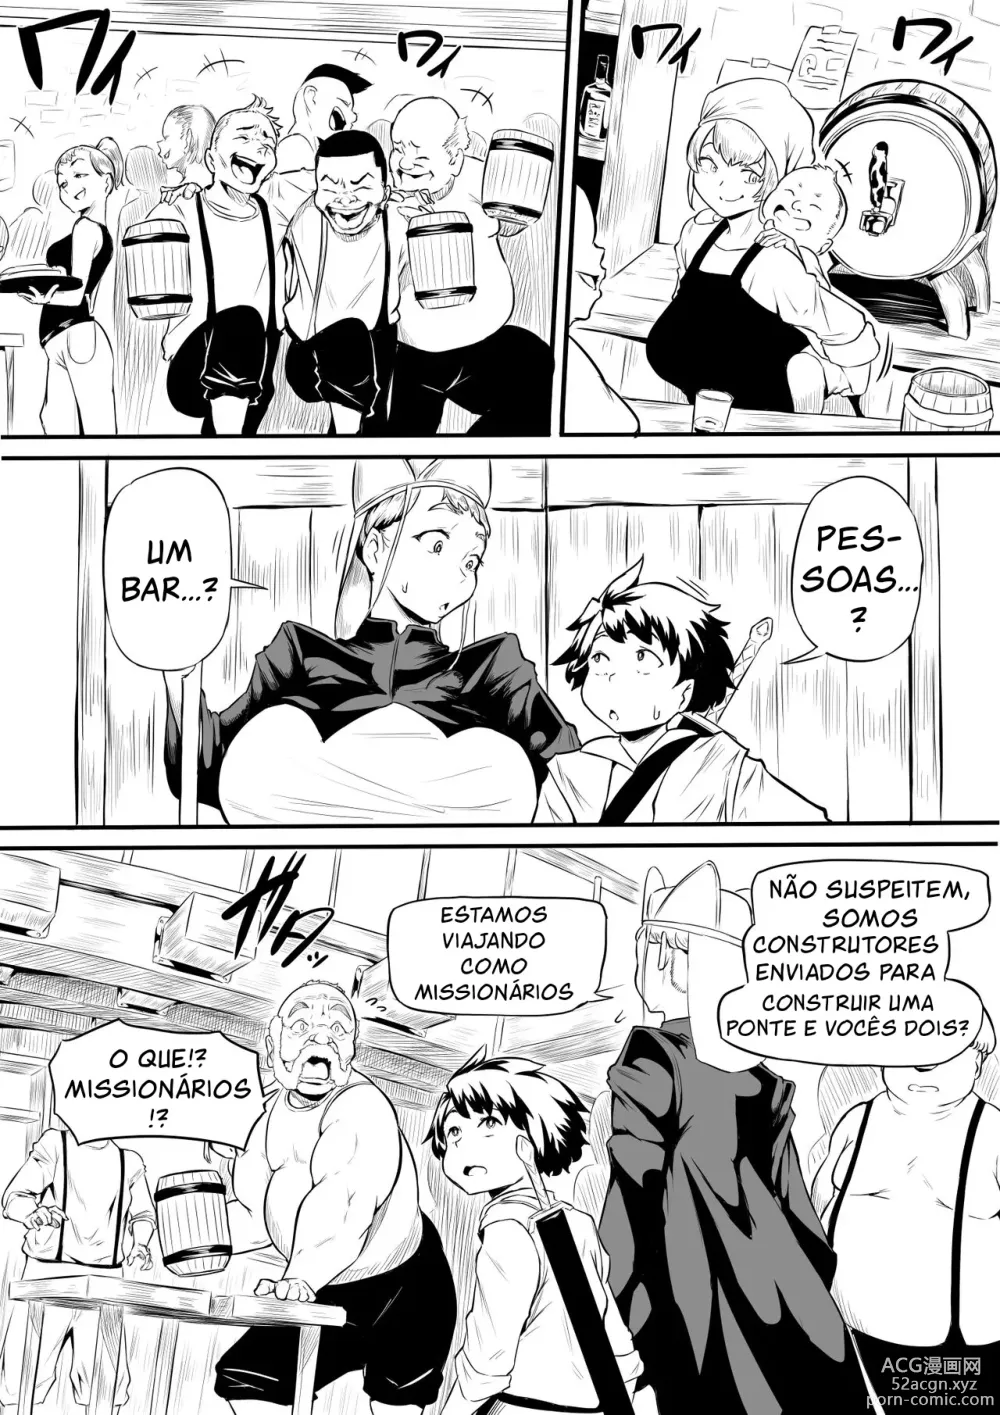 Page 4 of doujinshi Taverna Orc PT BR